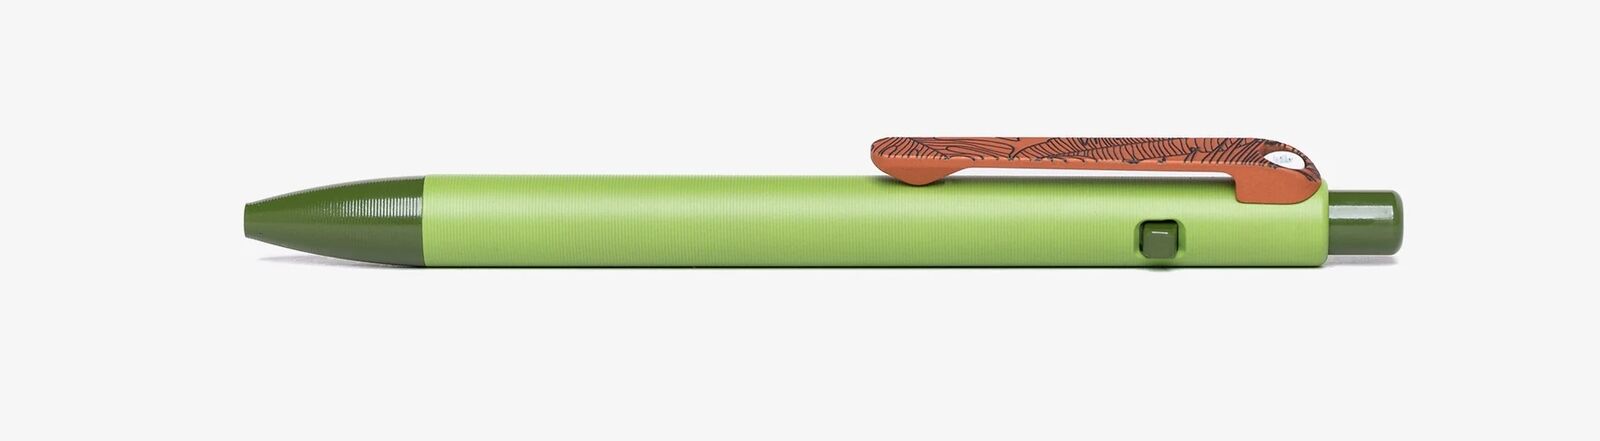 Tactile Turn Sprout Slim Slide Click Pen Green Cerakote Body Mini 10-SS3-SEA-SPO